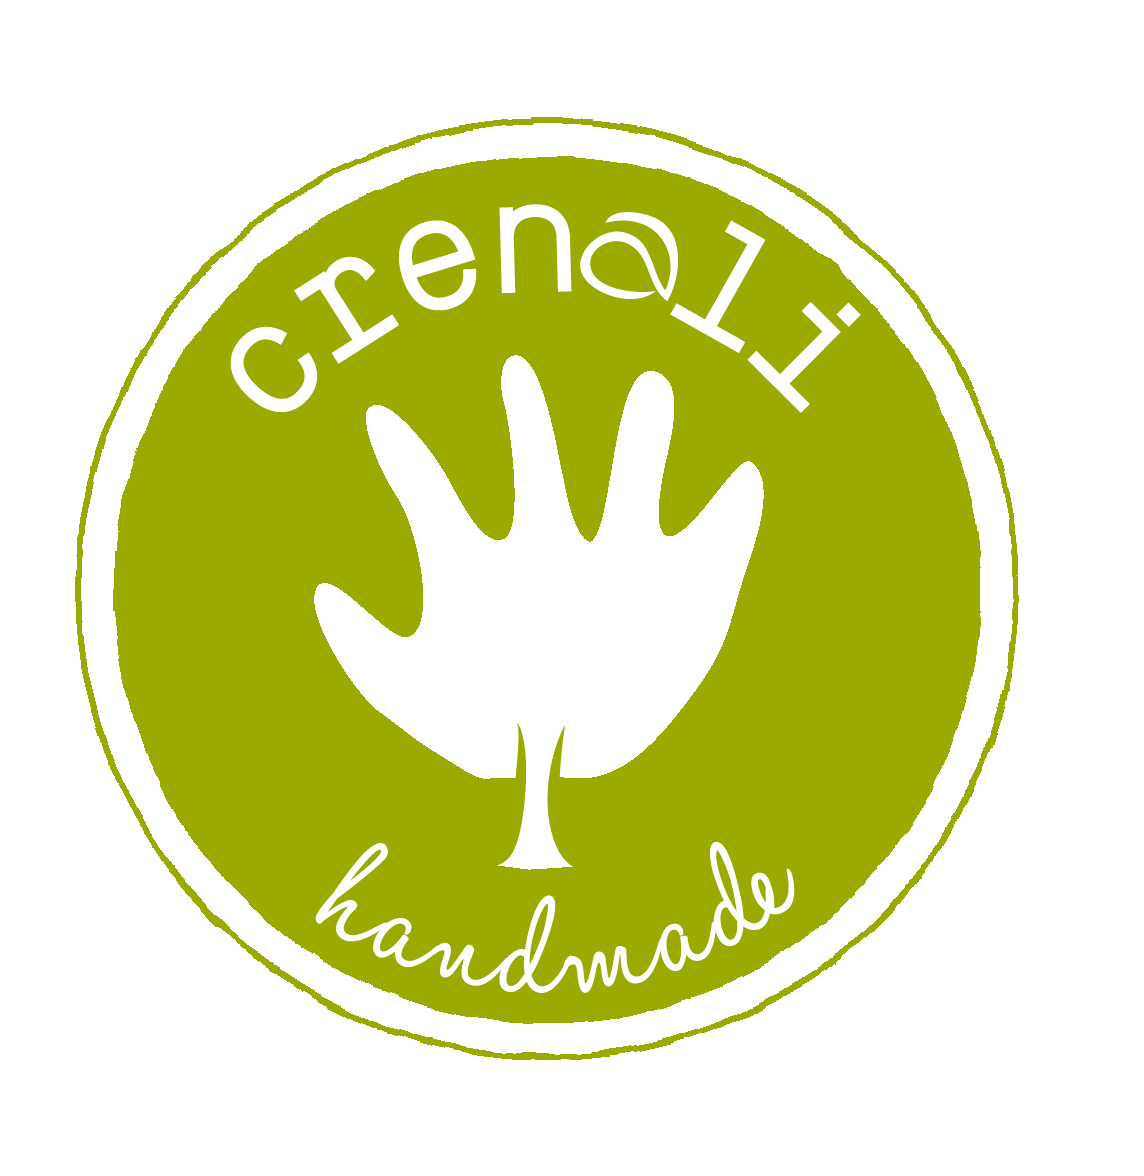 Crenali handmade